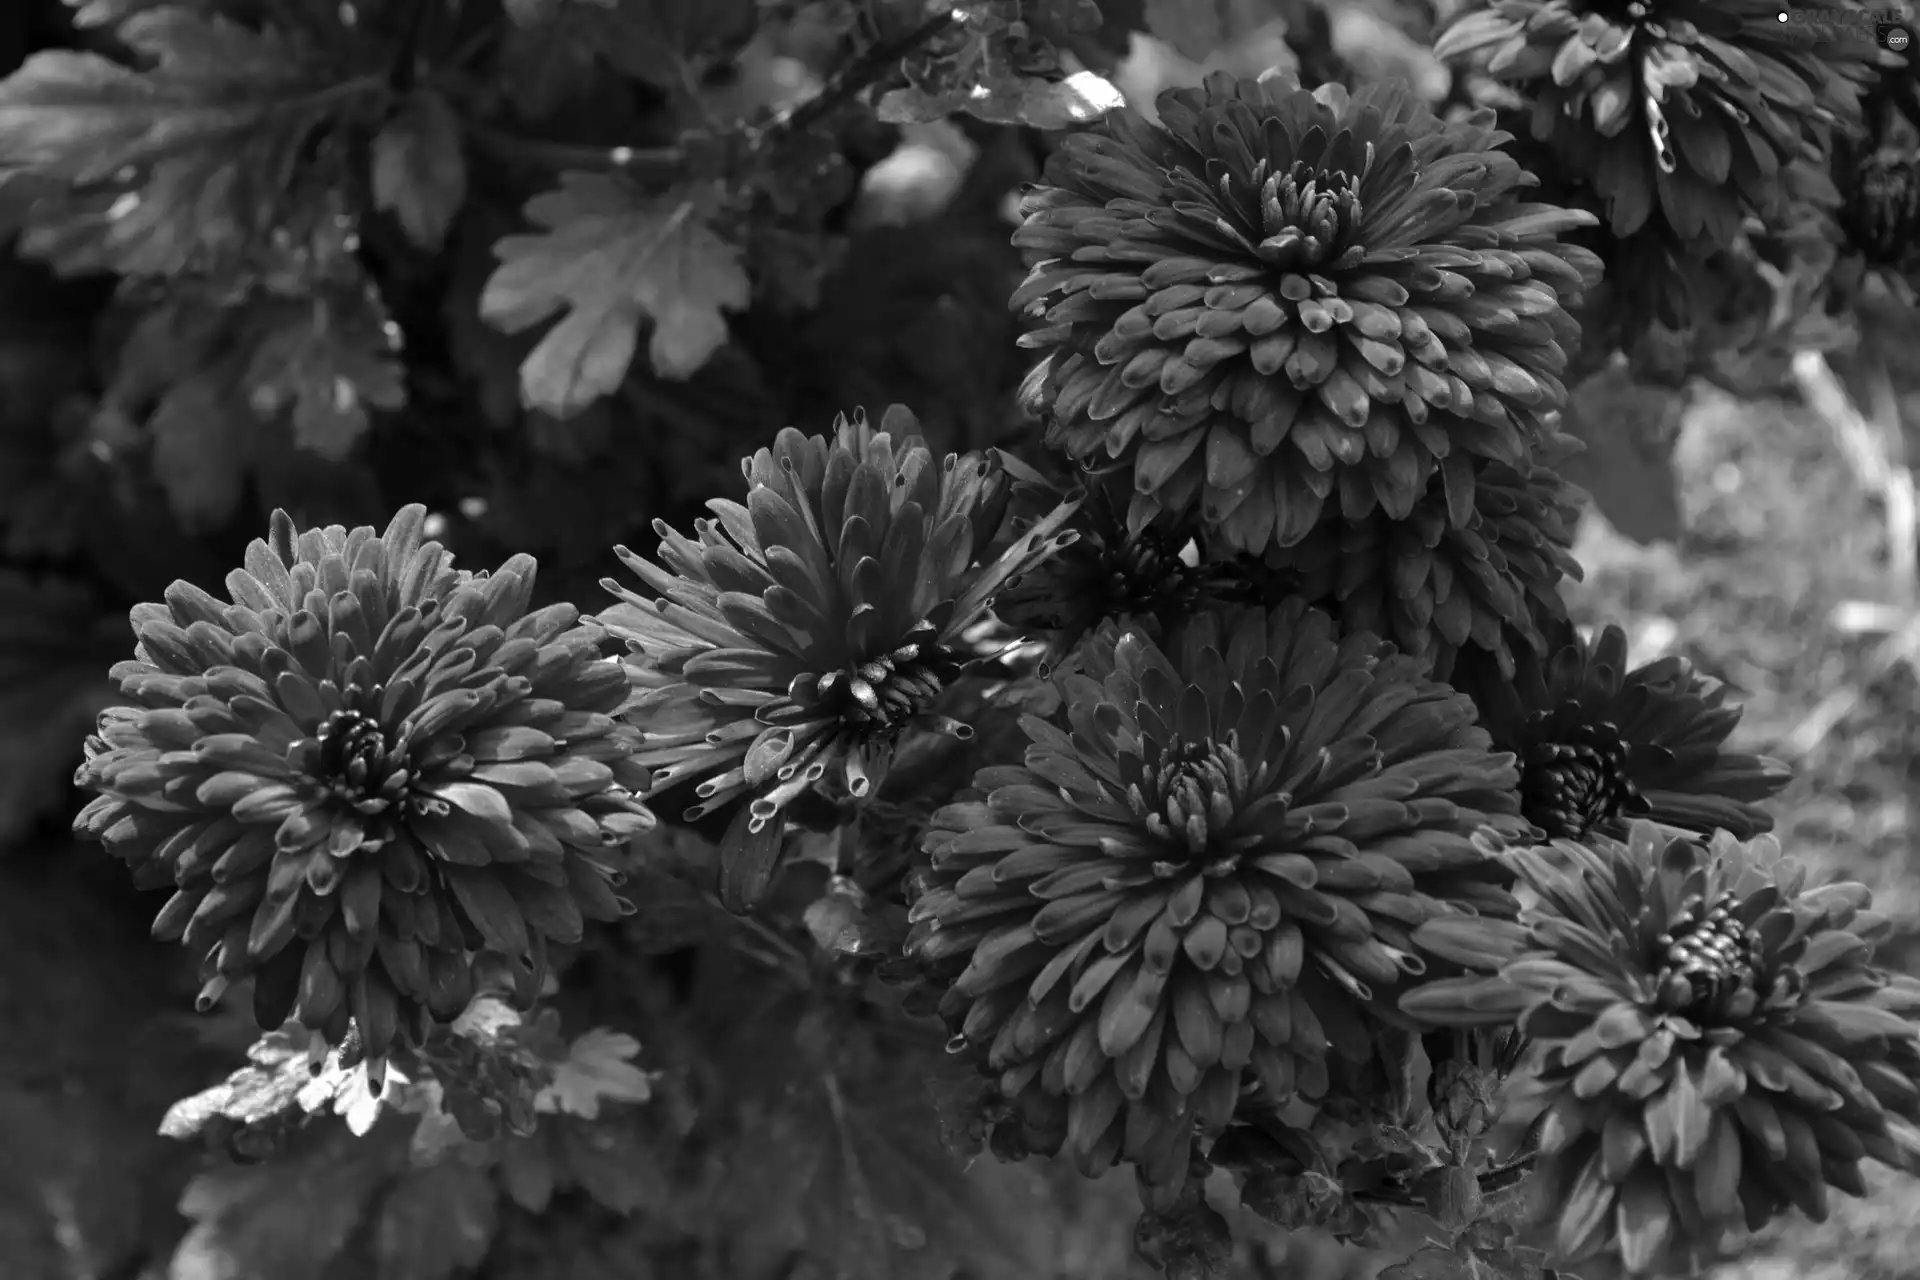 chrysanthemum, All Souls